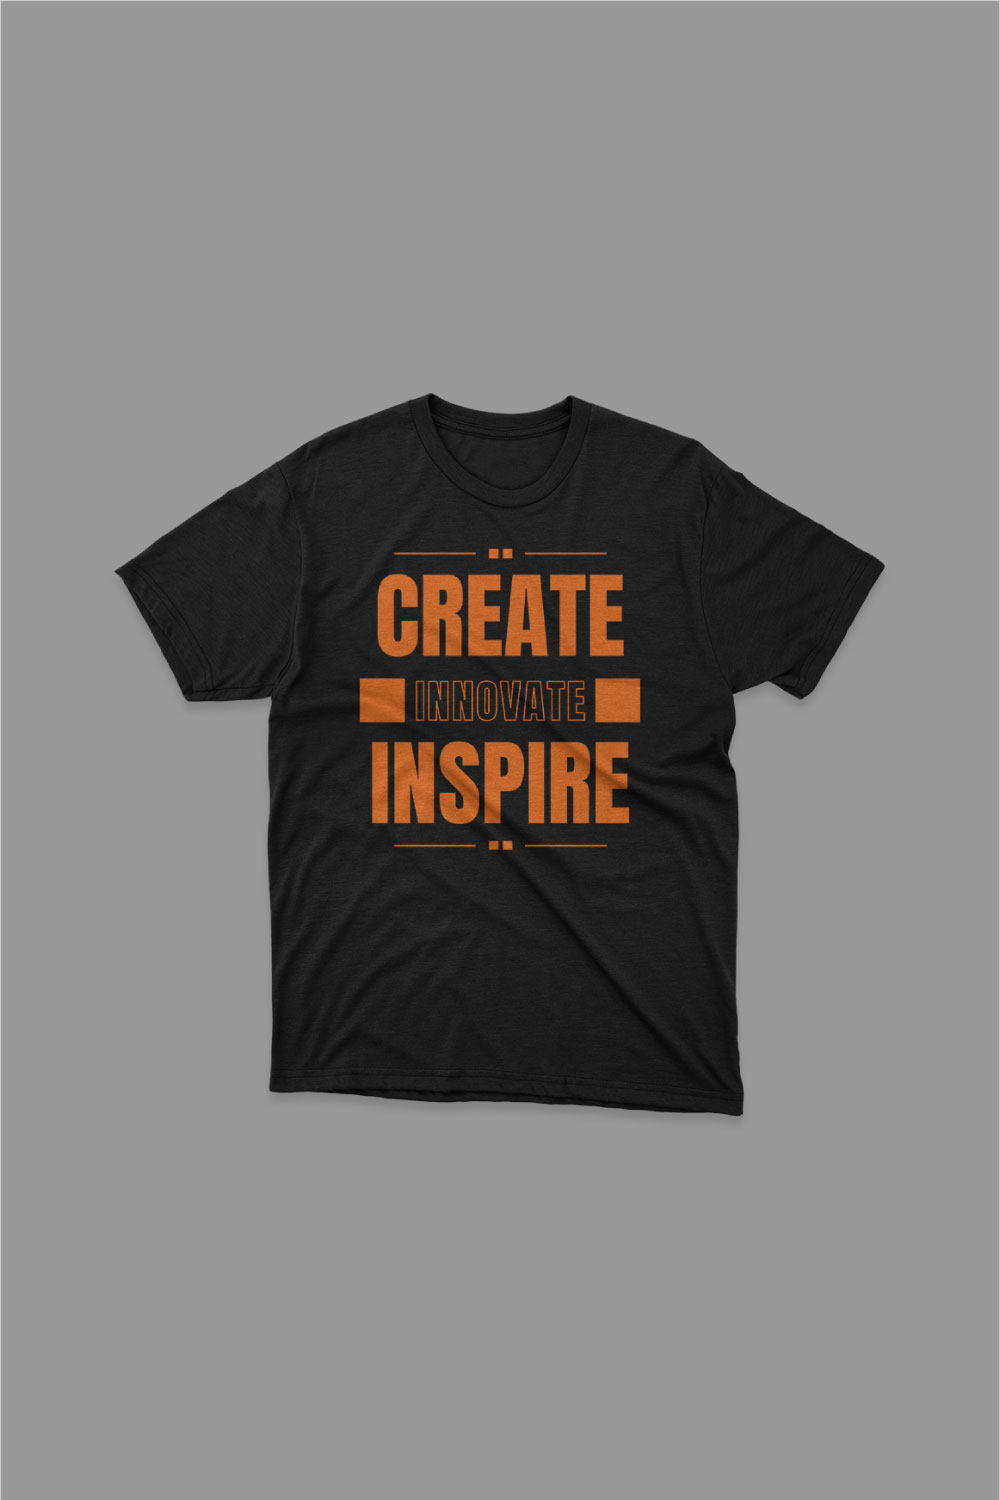 inspirational T Shirt Design pinterest preview image.